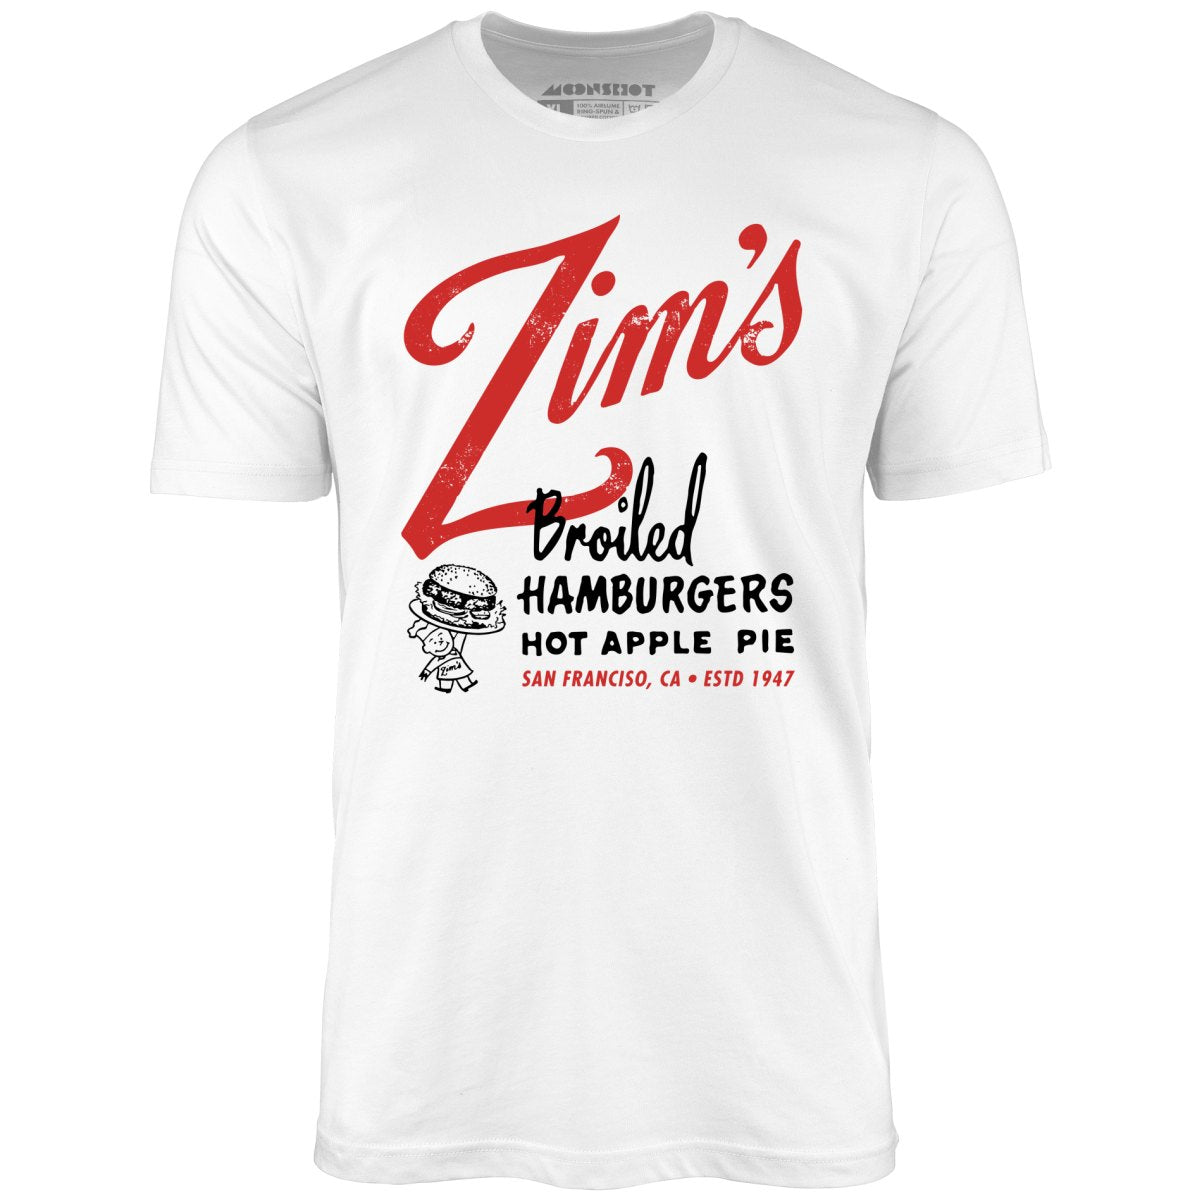 Zim's Hamburgers v1 - San Francisco, CA - Vintage Restaurant - Unisex T-Shirt